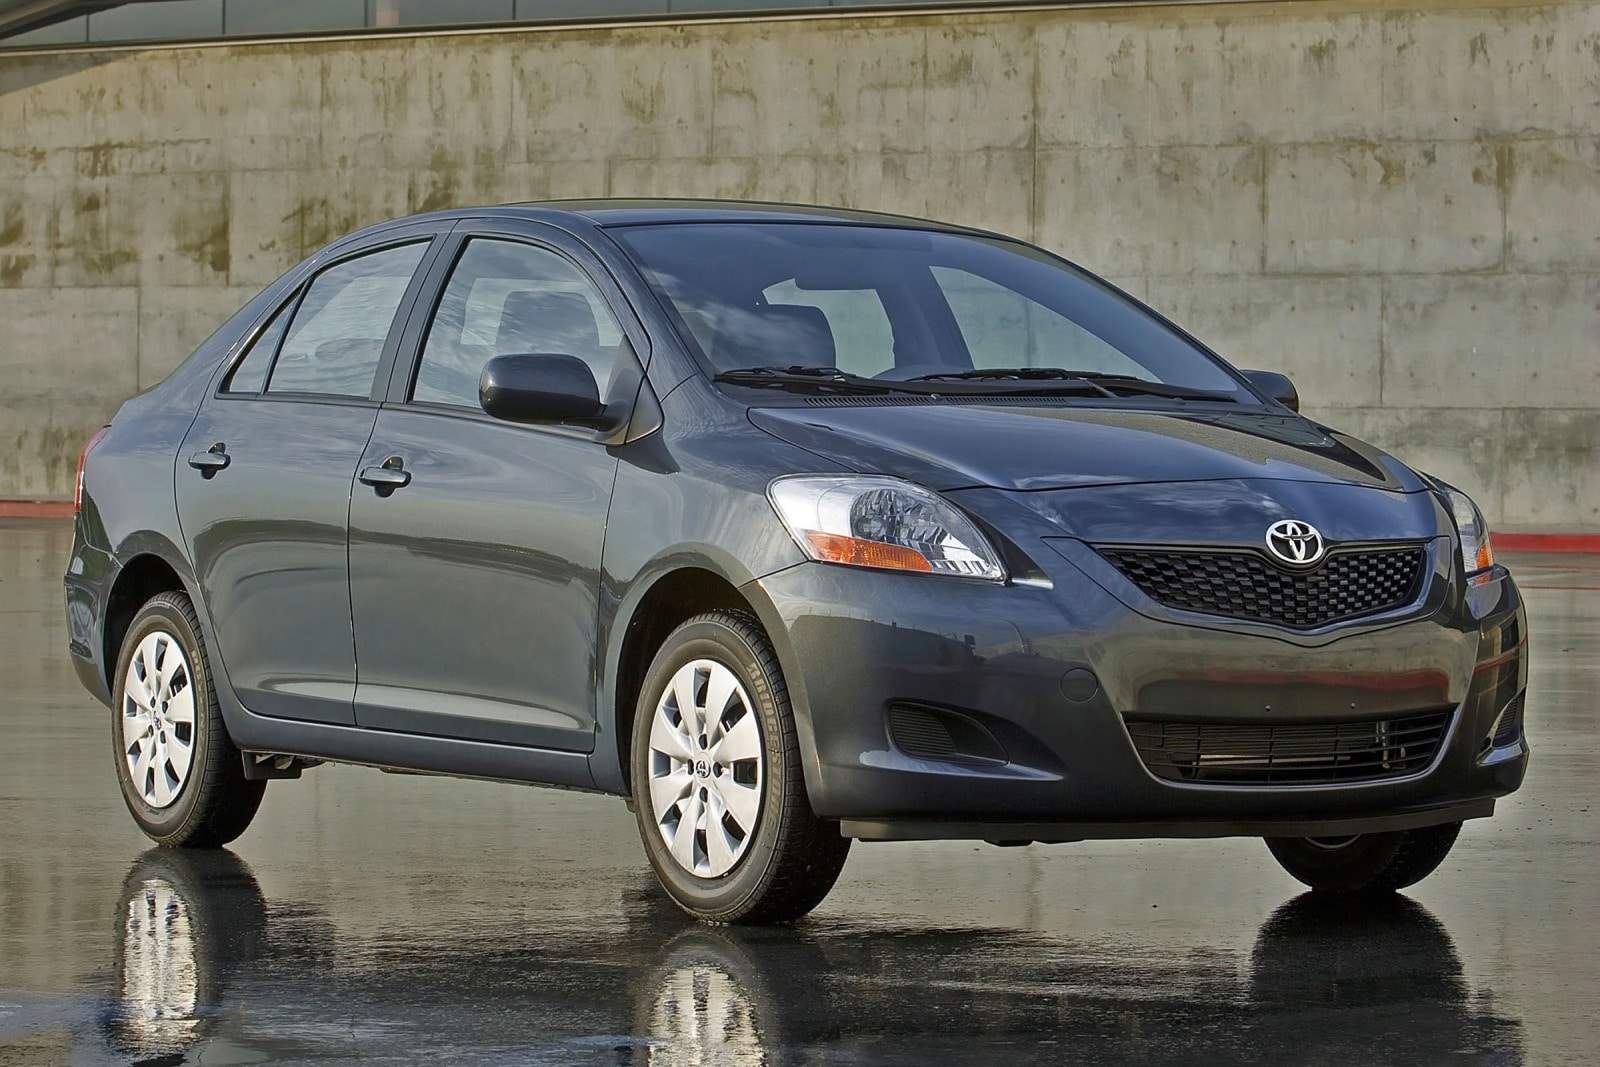 Used 2012 Toyota Yaris Sedan Review | Edmunds